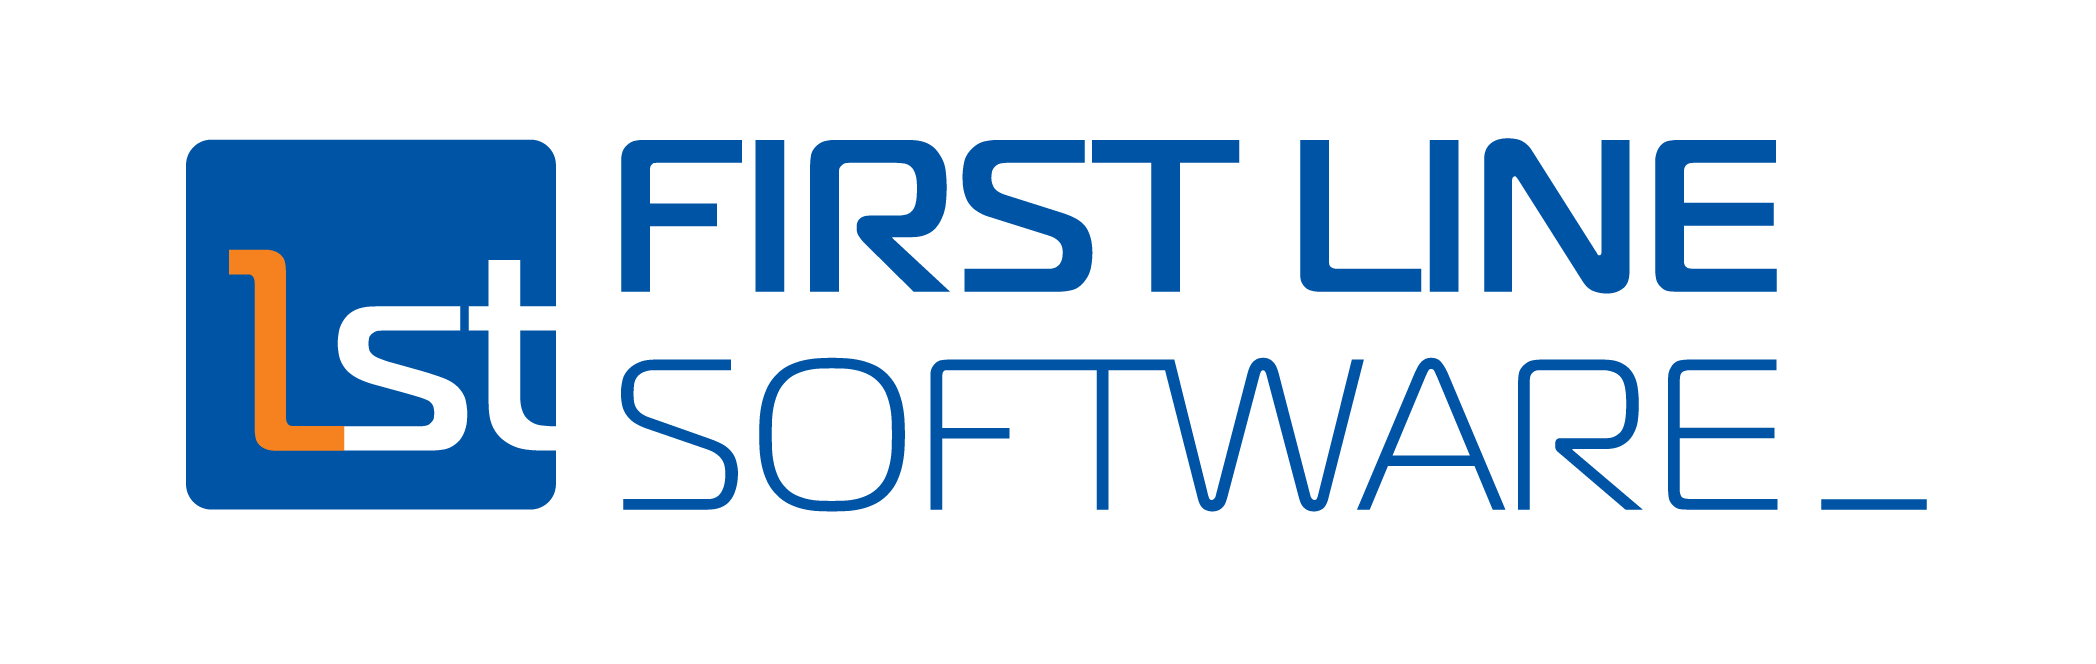 First line. Software компания. Line software. One line логотип компания. First line support